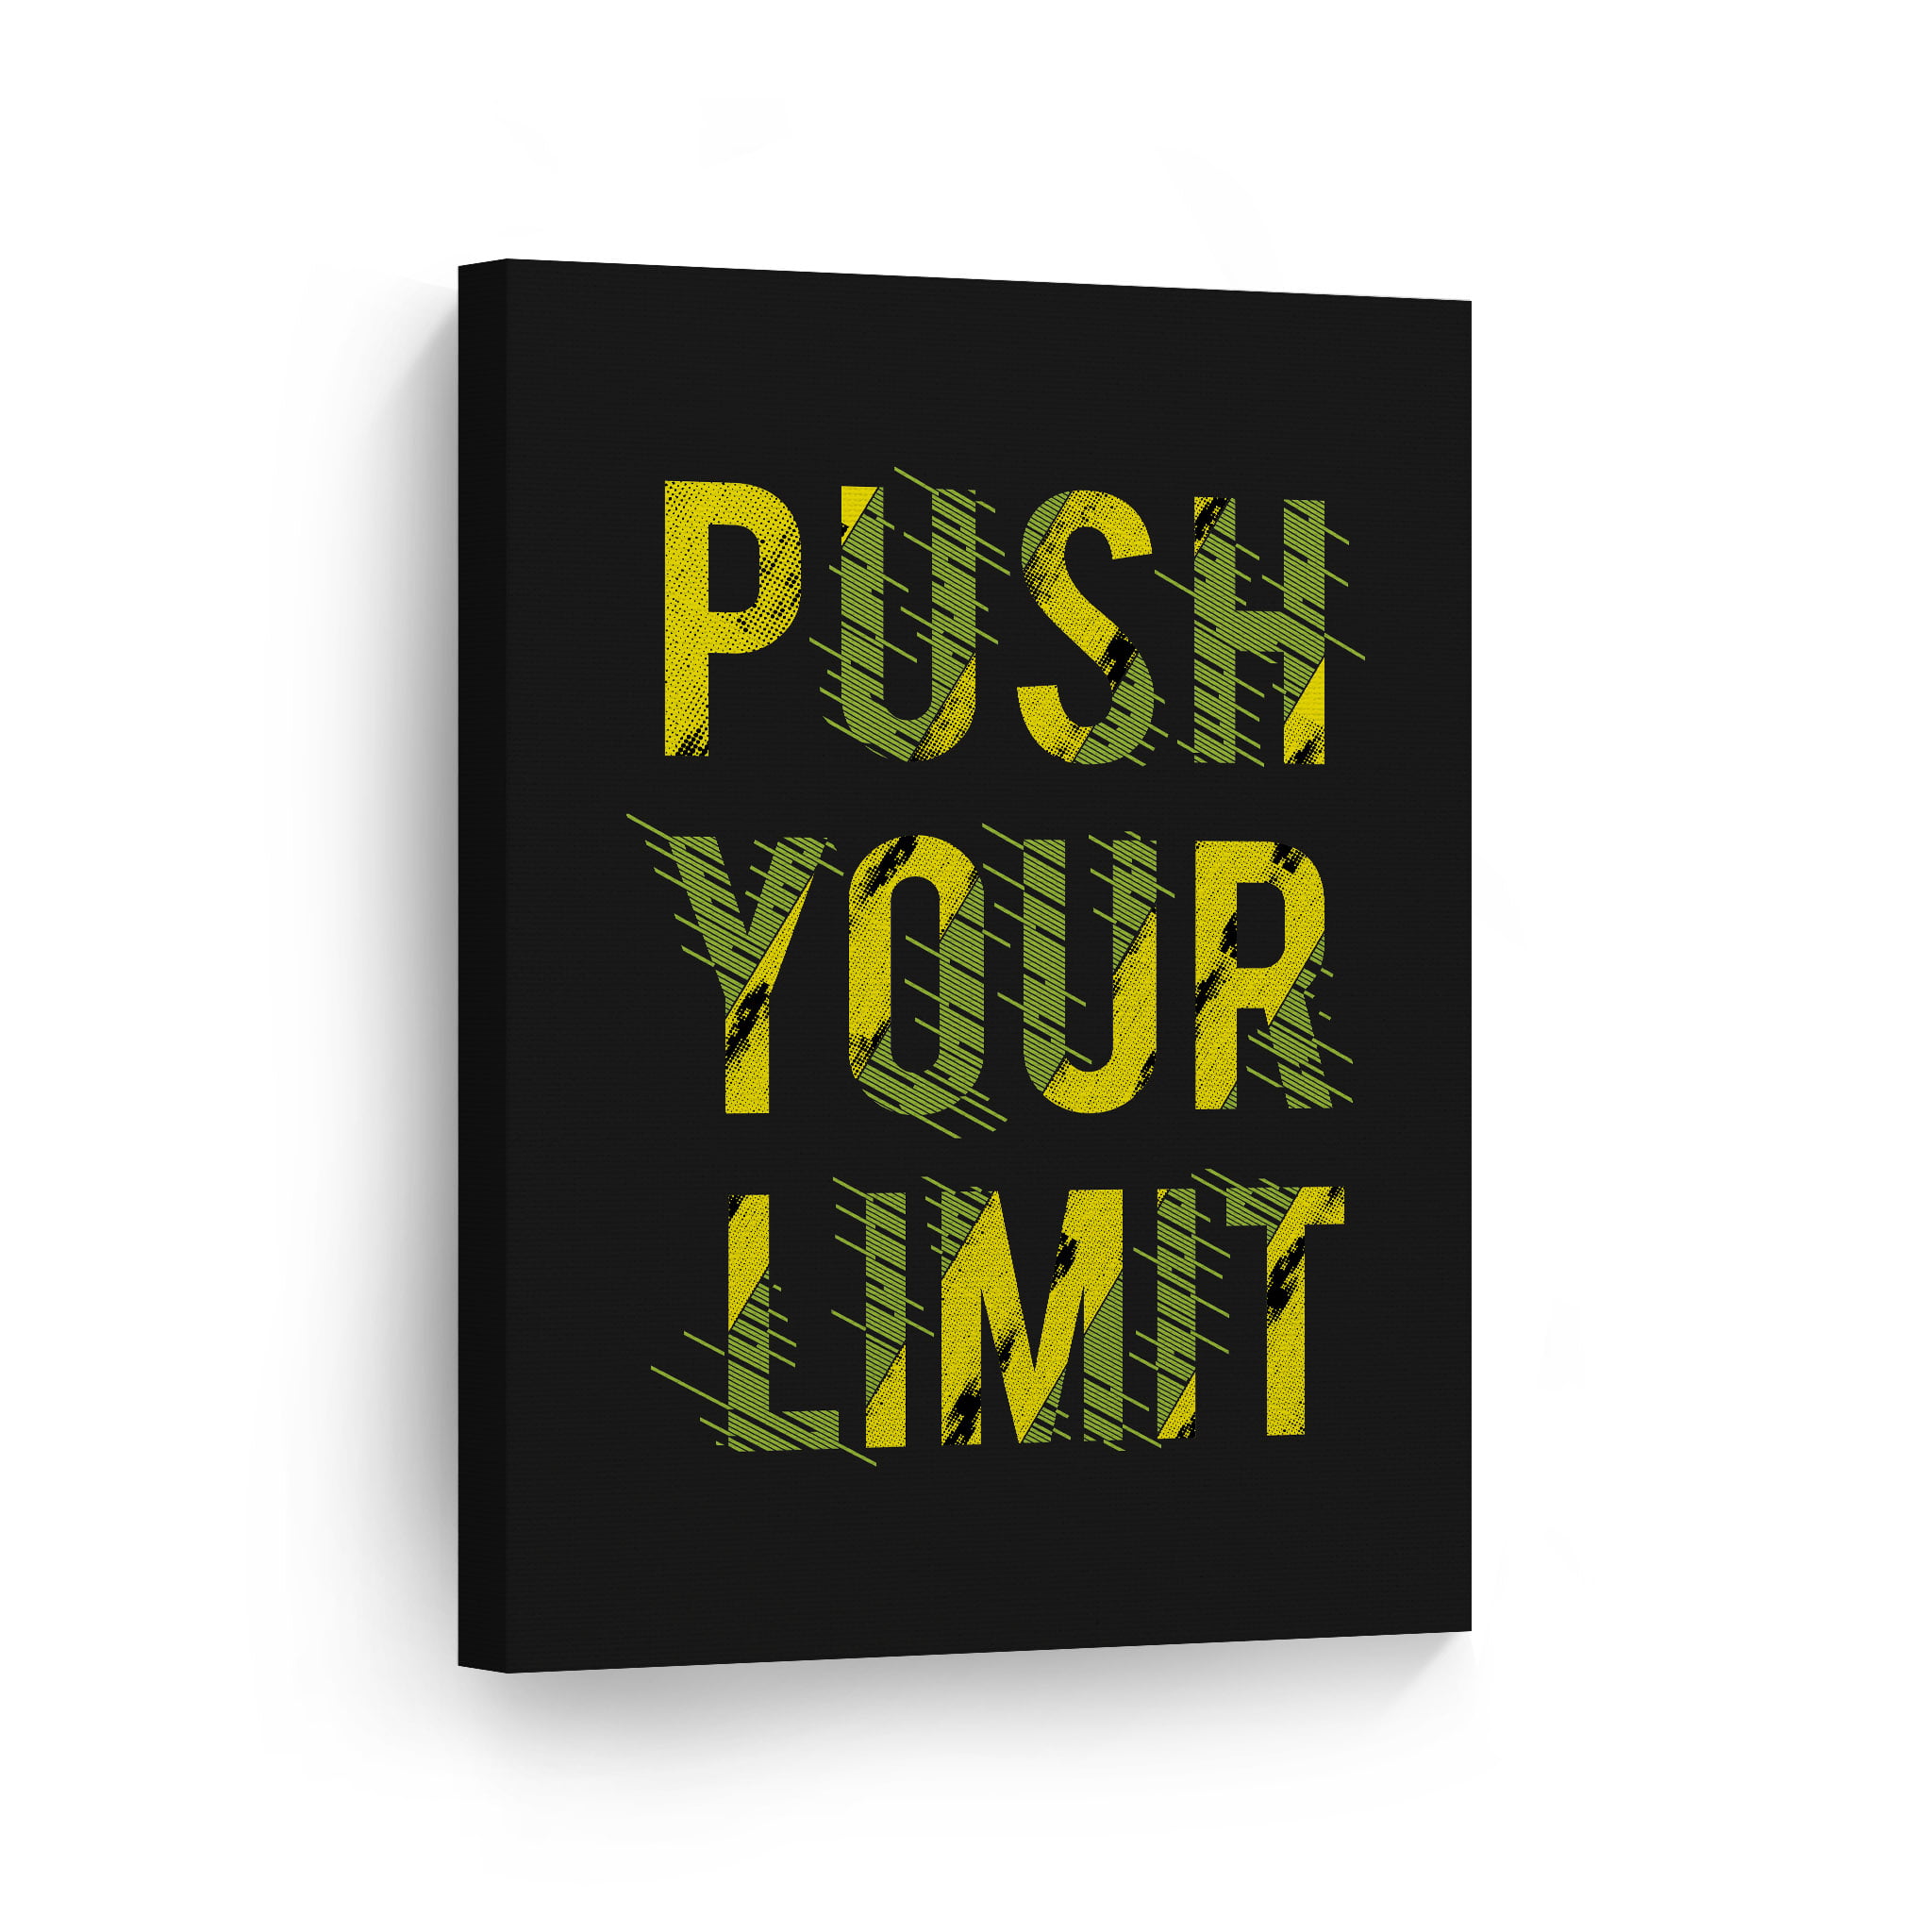 Entrepreneur Inspirational Wall Art Print Motivational Quote Poster Decor Gift 